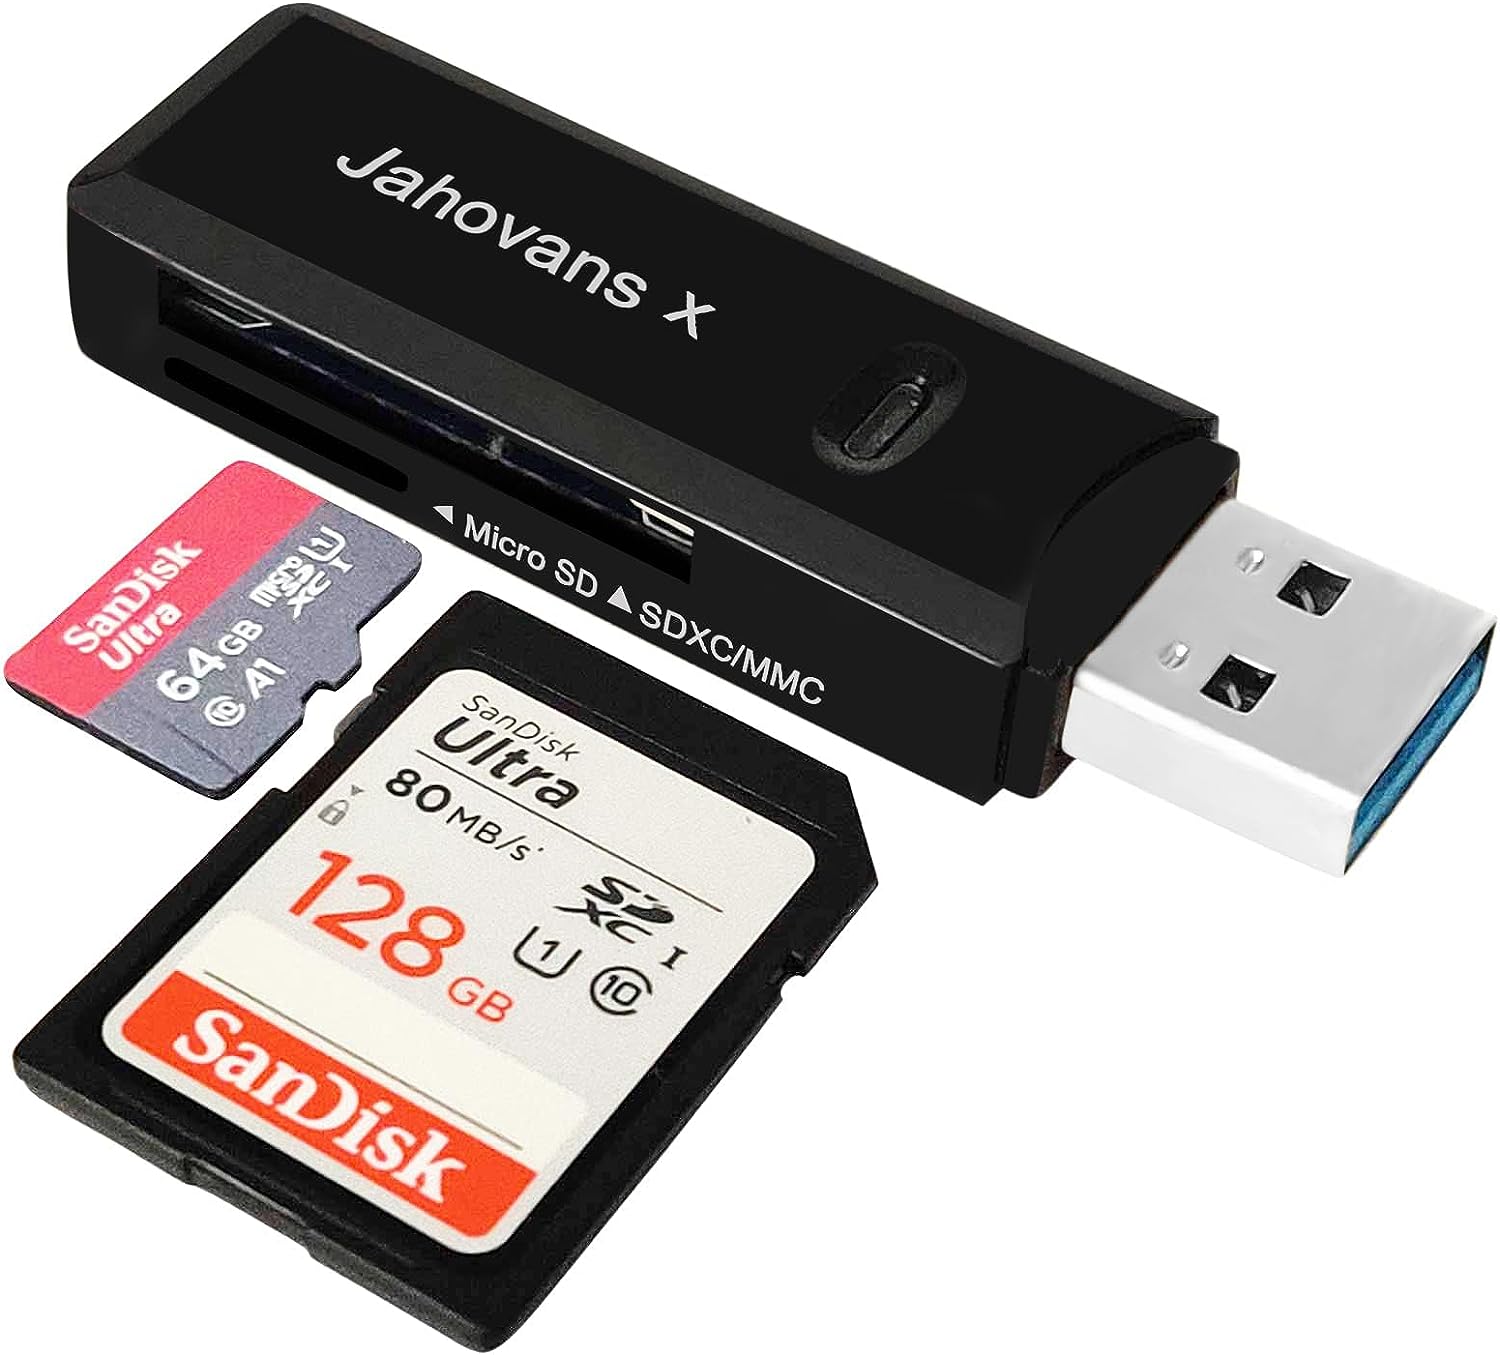 USB 3.0 SD Card Reader for PC, Laptop, Mac, Windows, [...]